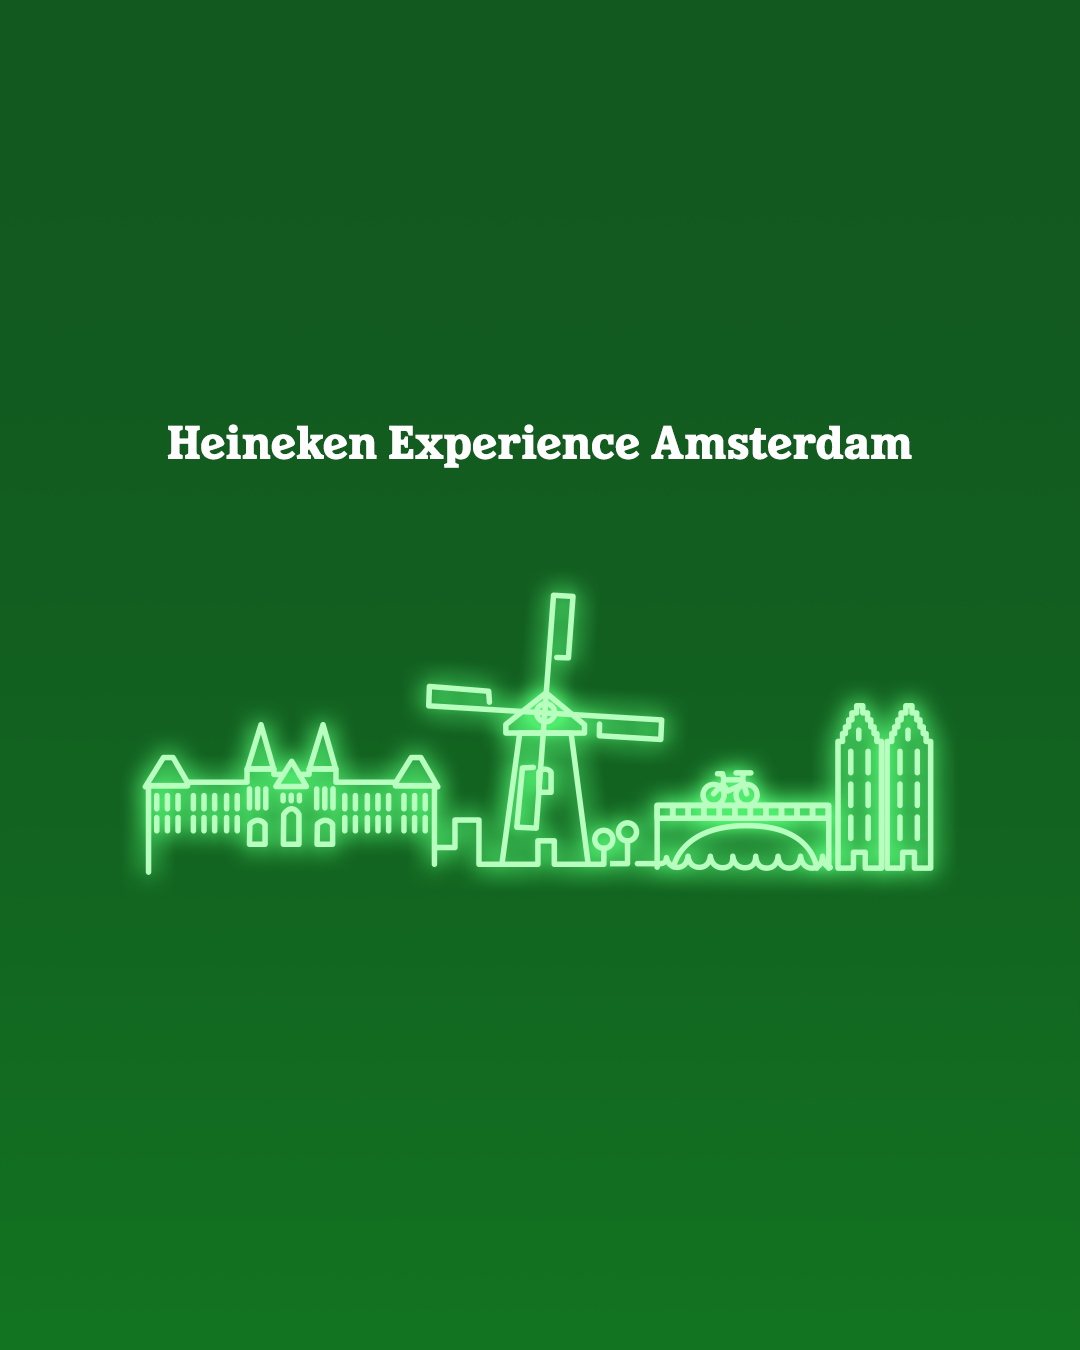 Heineken Heineken Experience Amsterdam